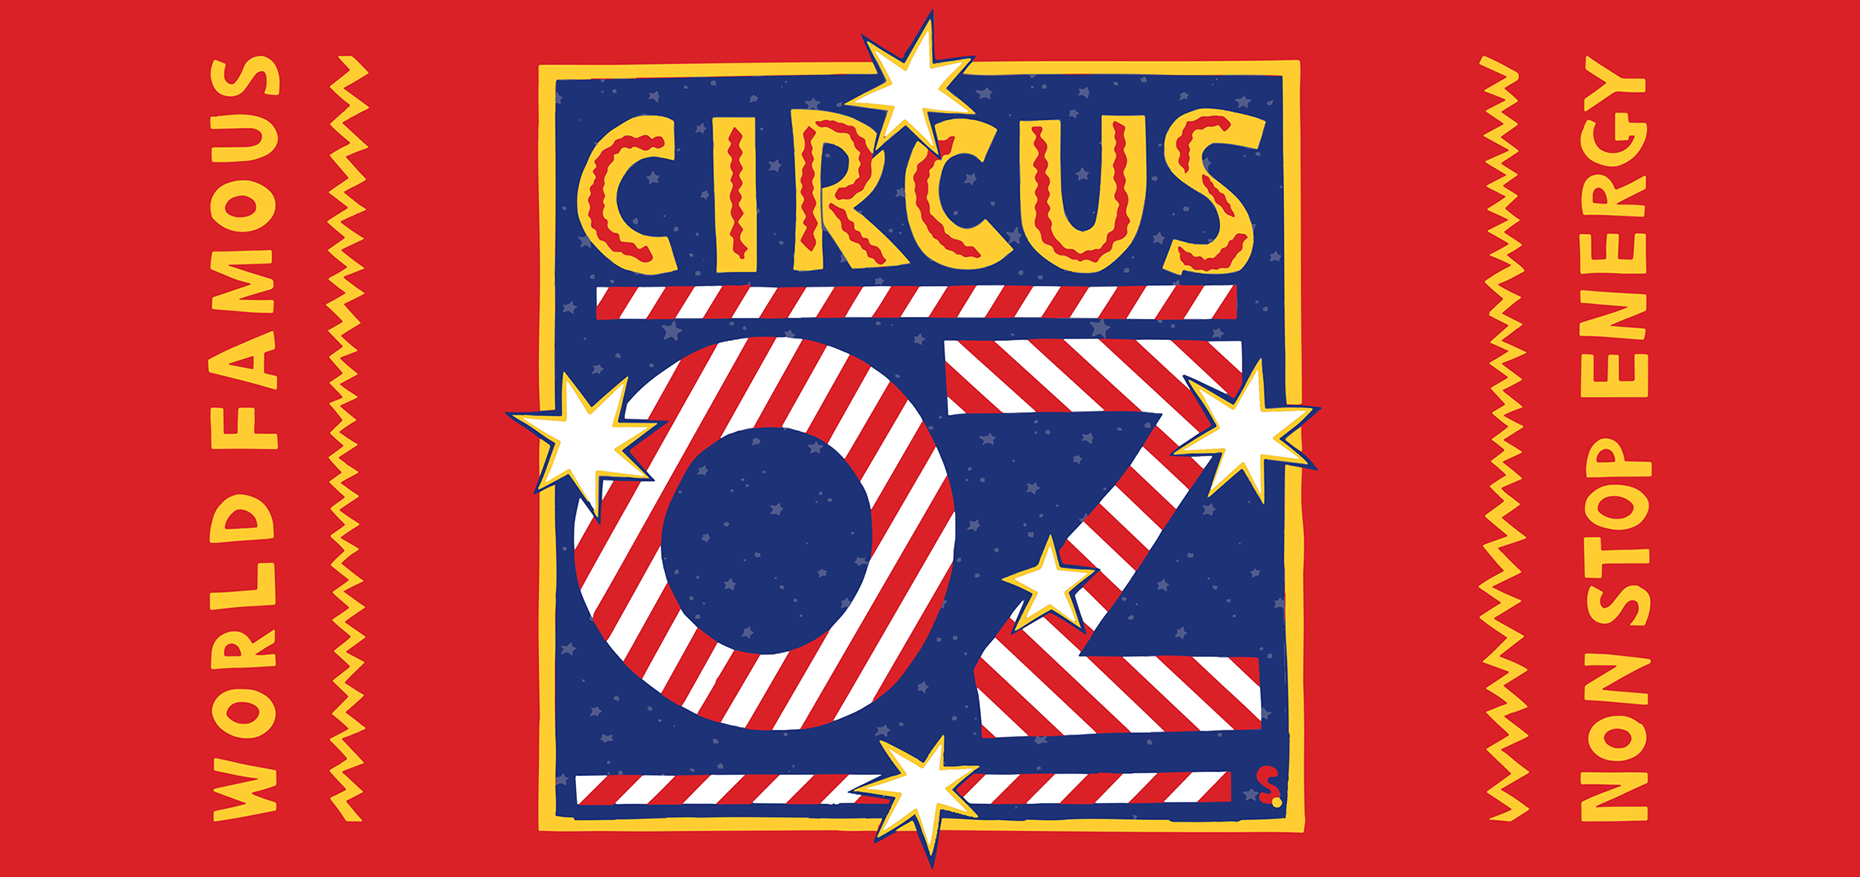 CircusOz_WorldFamousExt